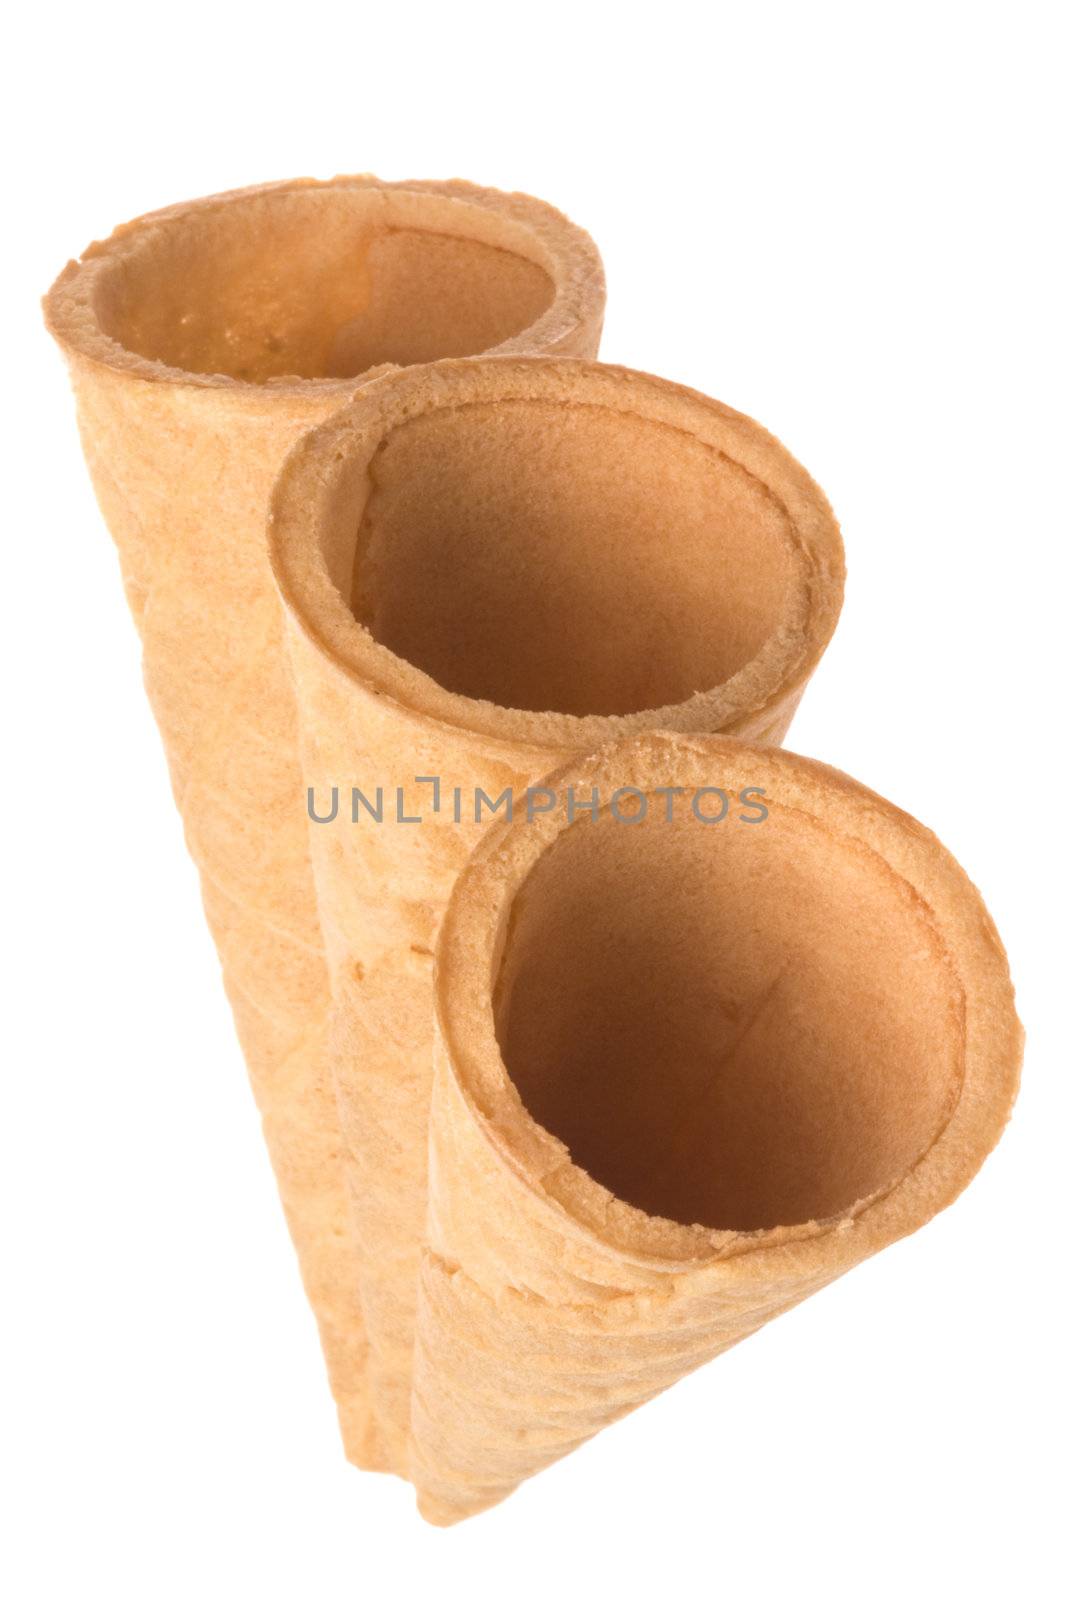 Isolated image of ice cream cones.